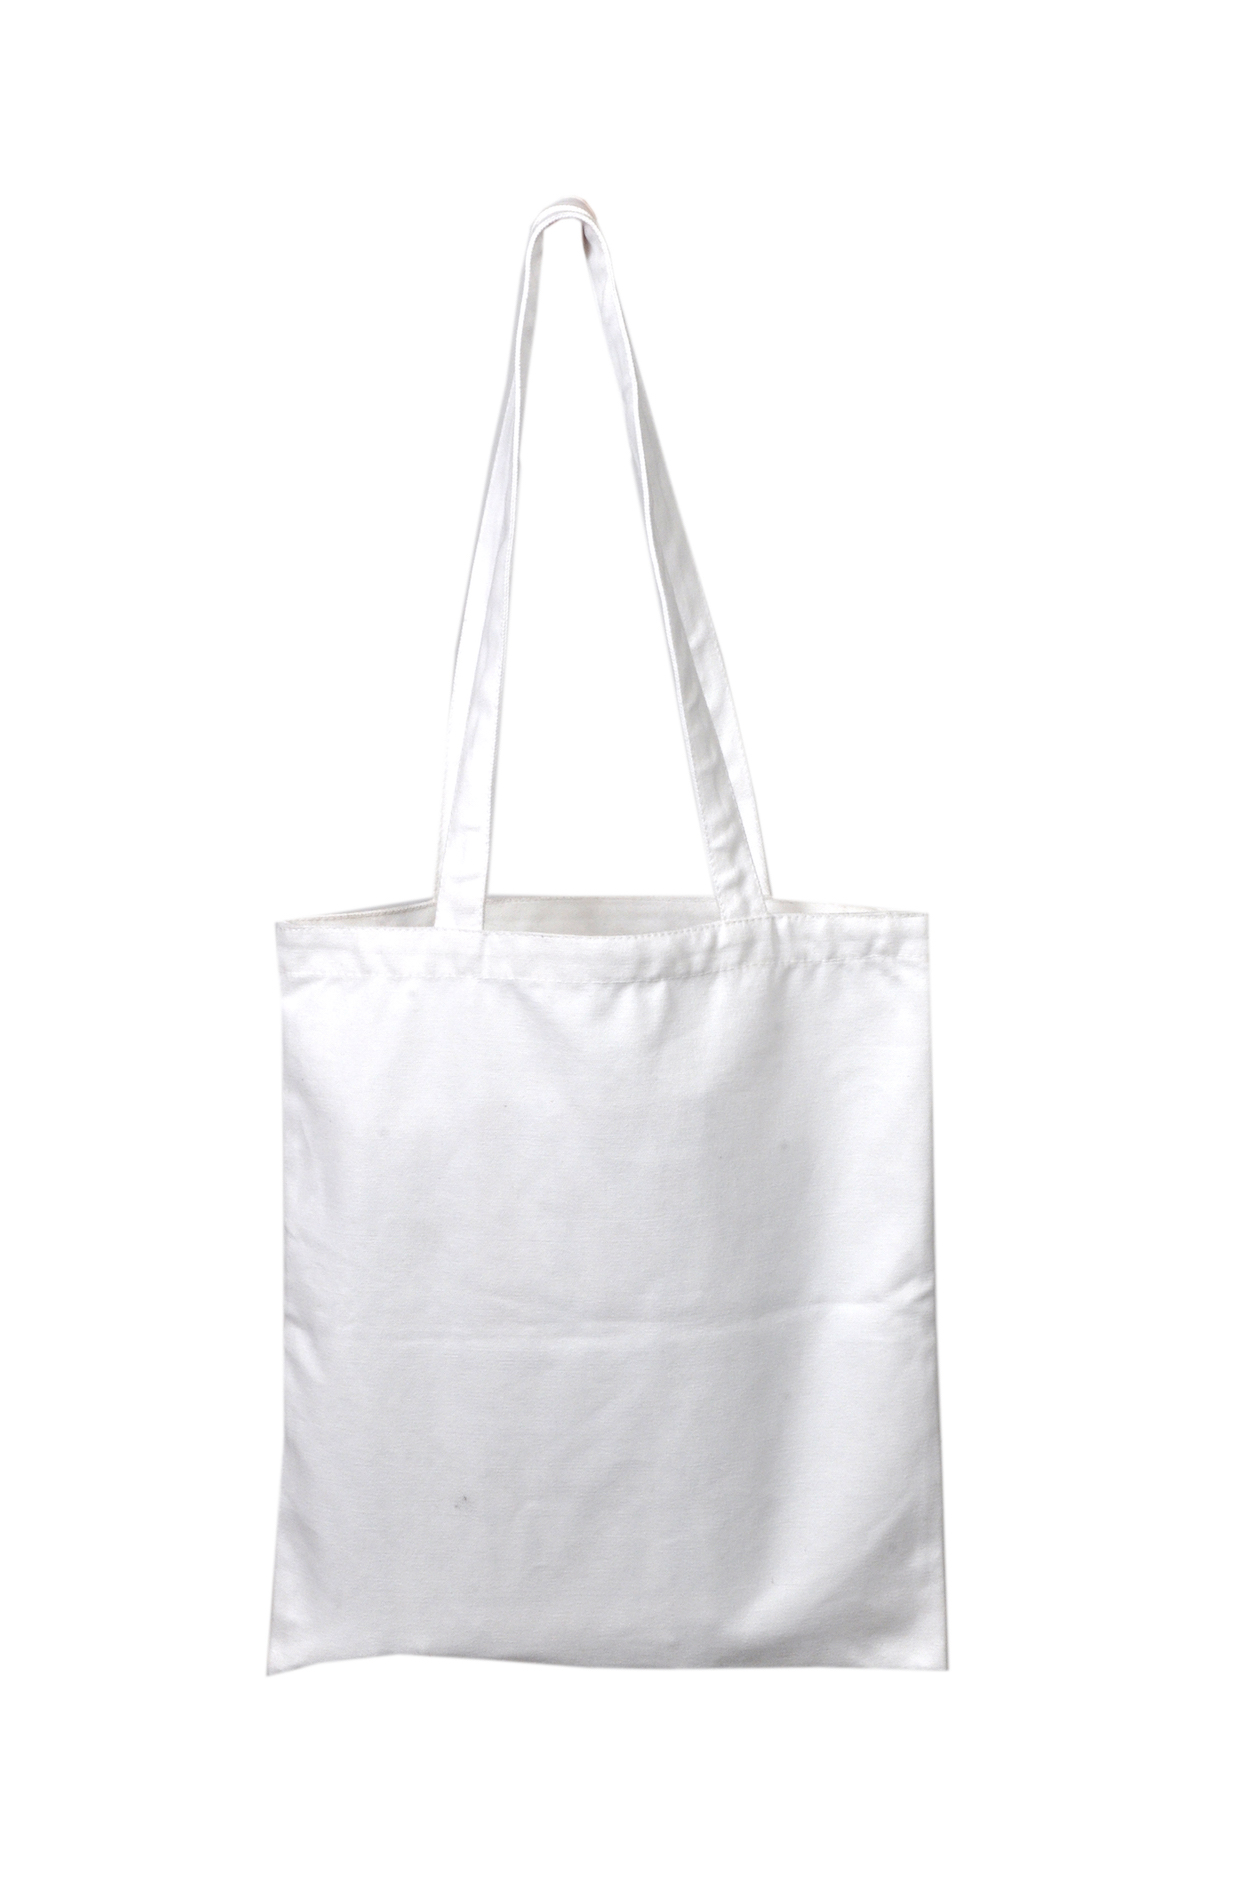 Tote Bag Plain White Top Sellers, 60% OFF | www.cineclubgarbi.cat